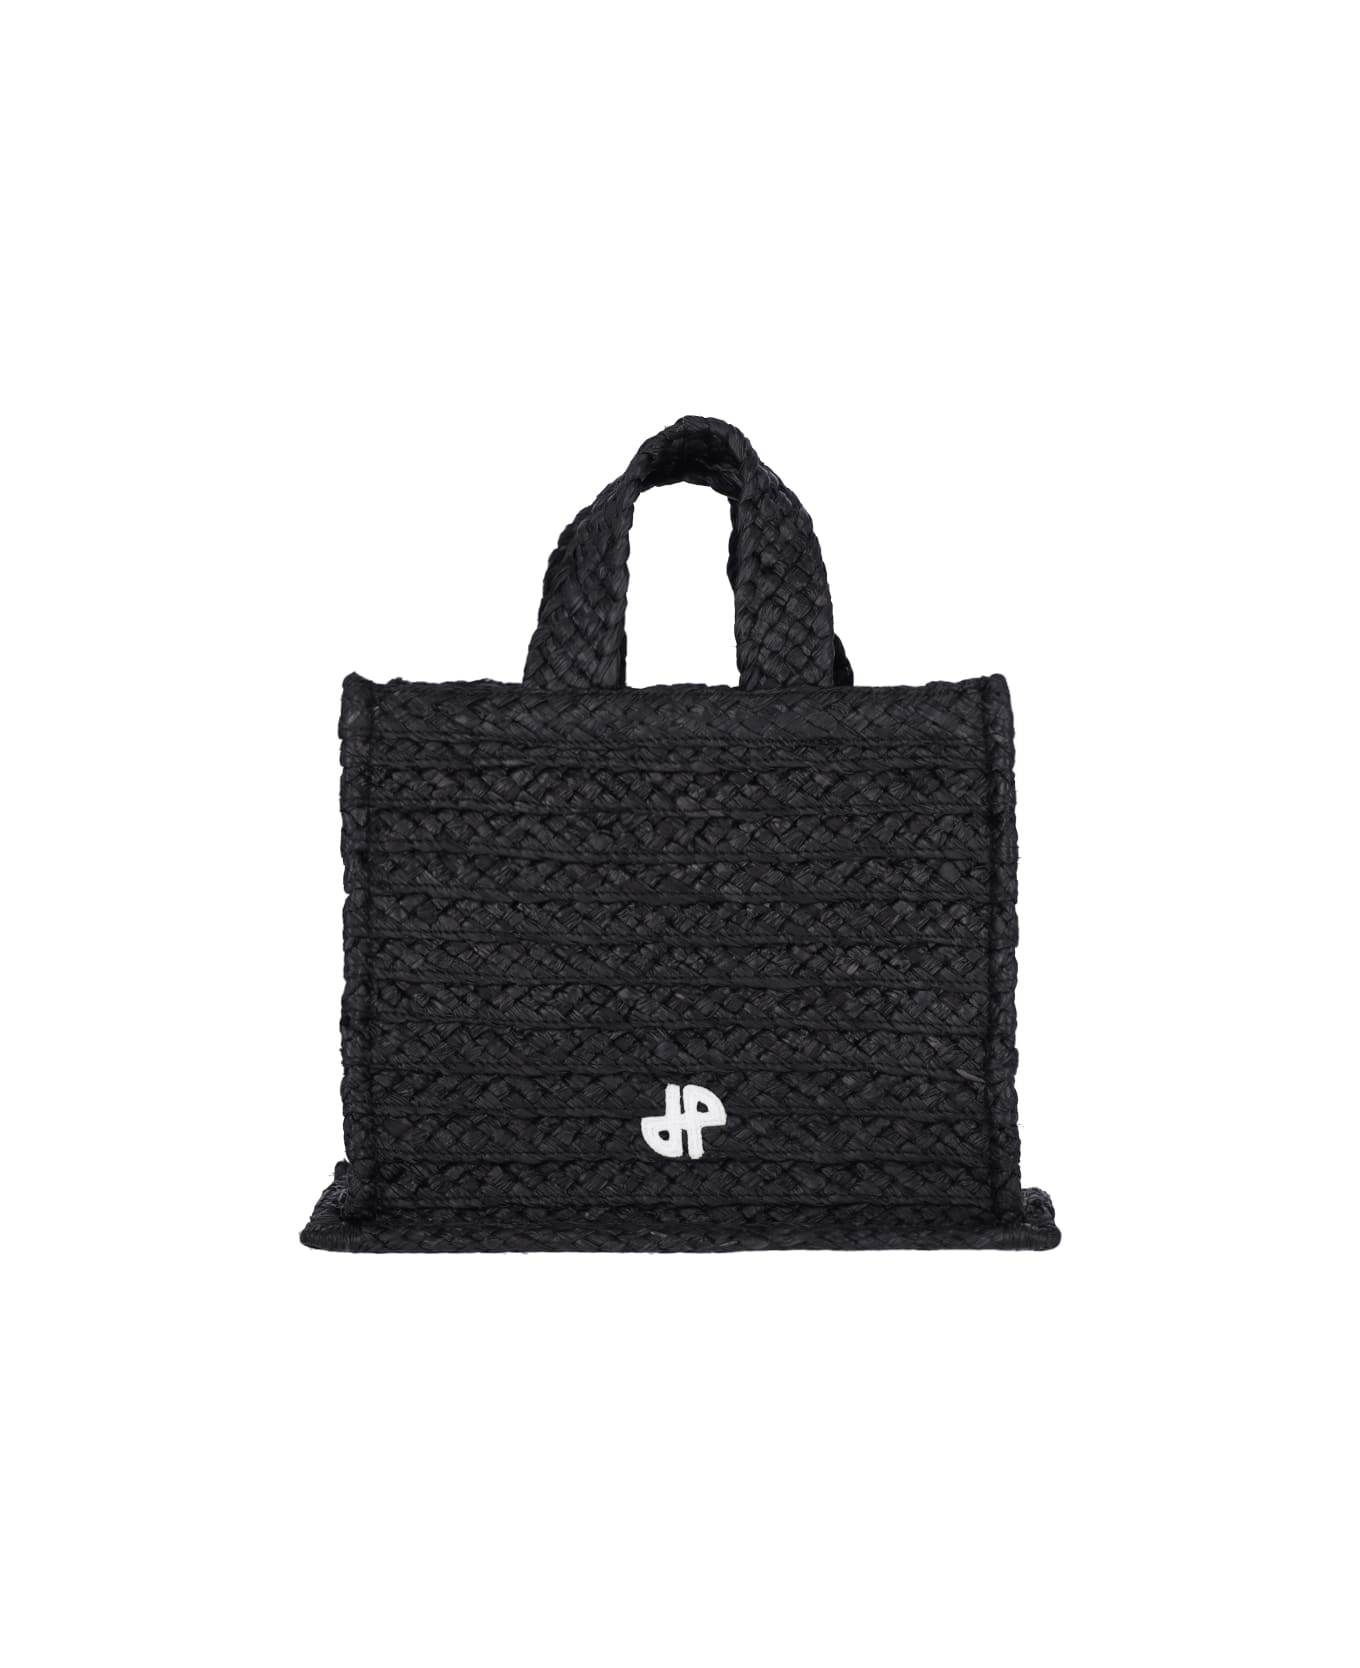 Patou Small Handbag "jp" - Black  